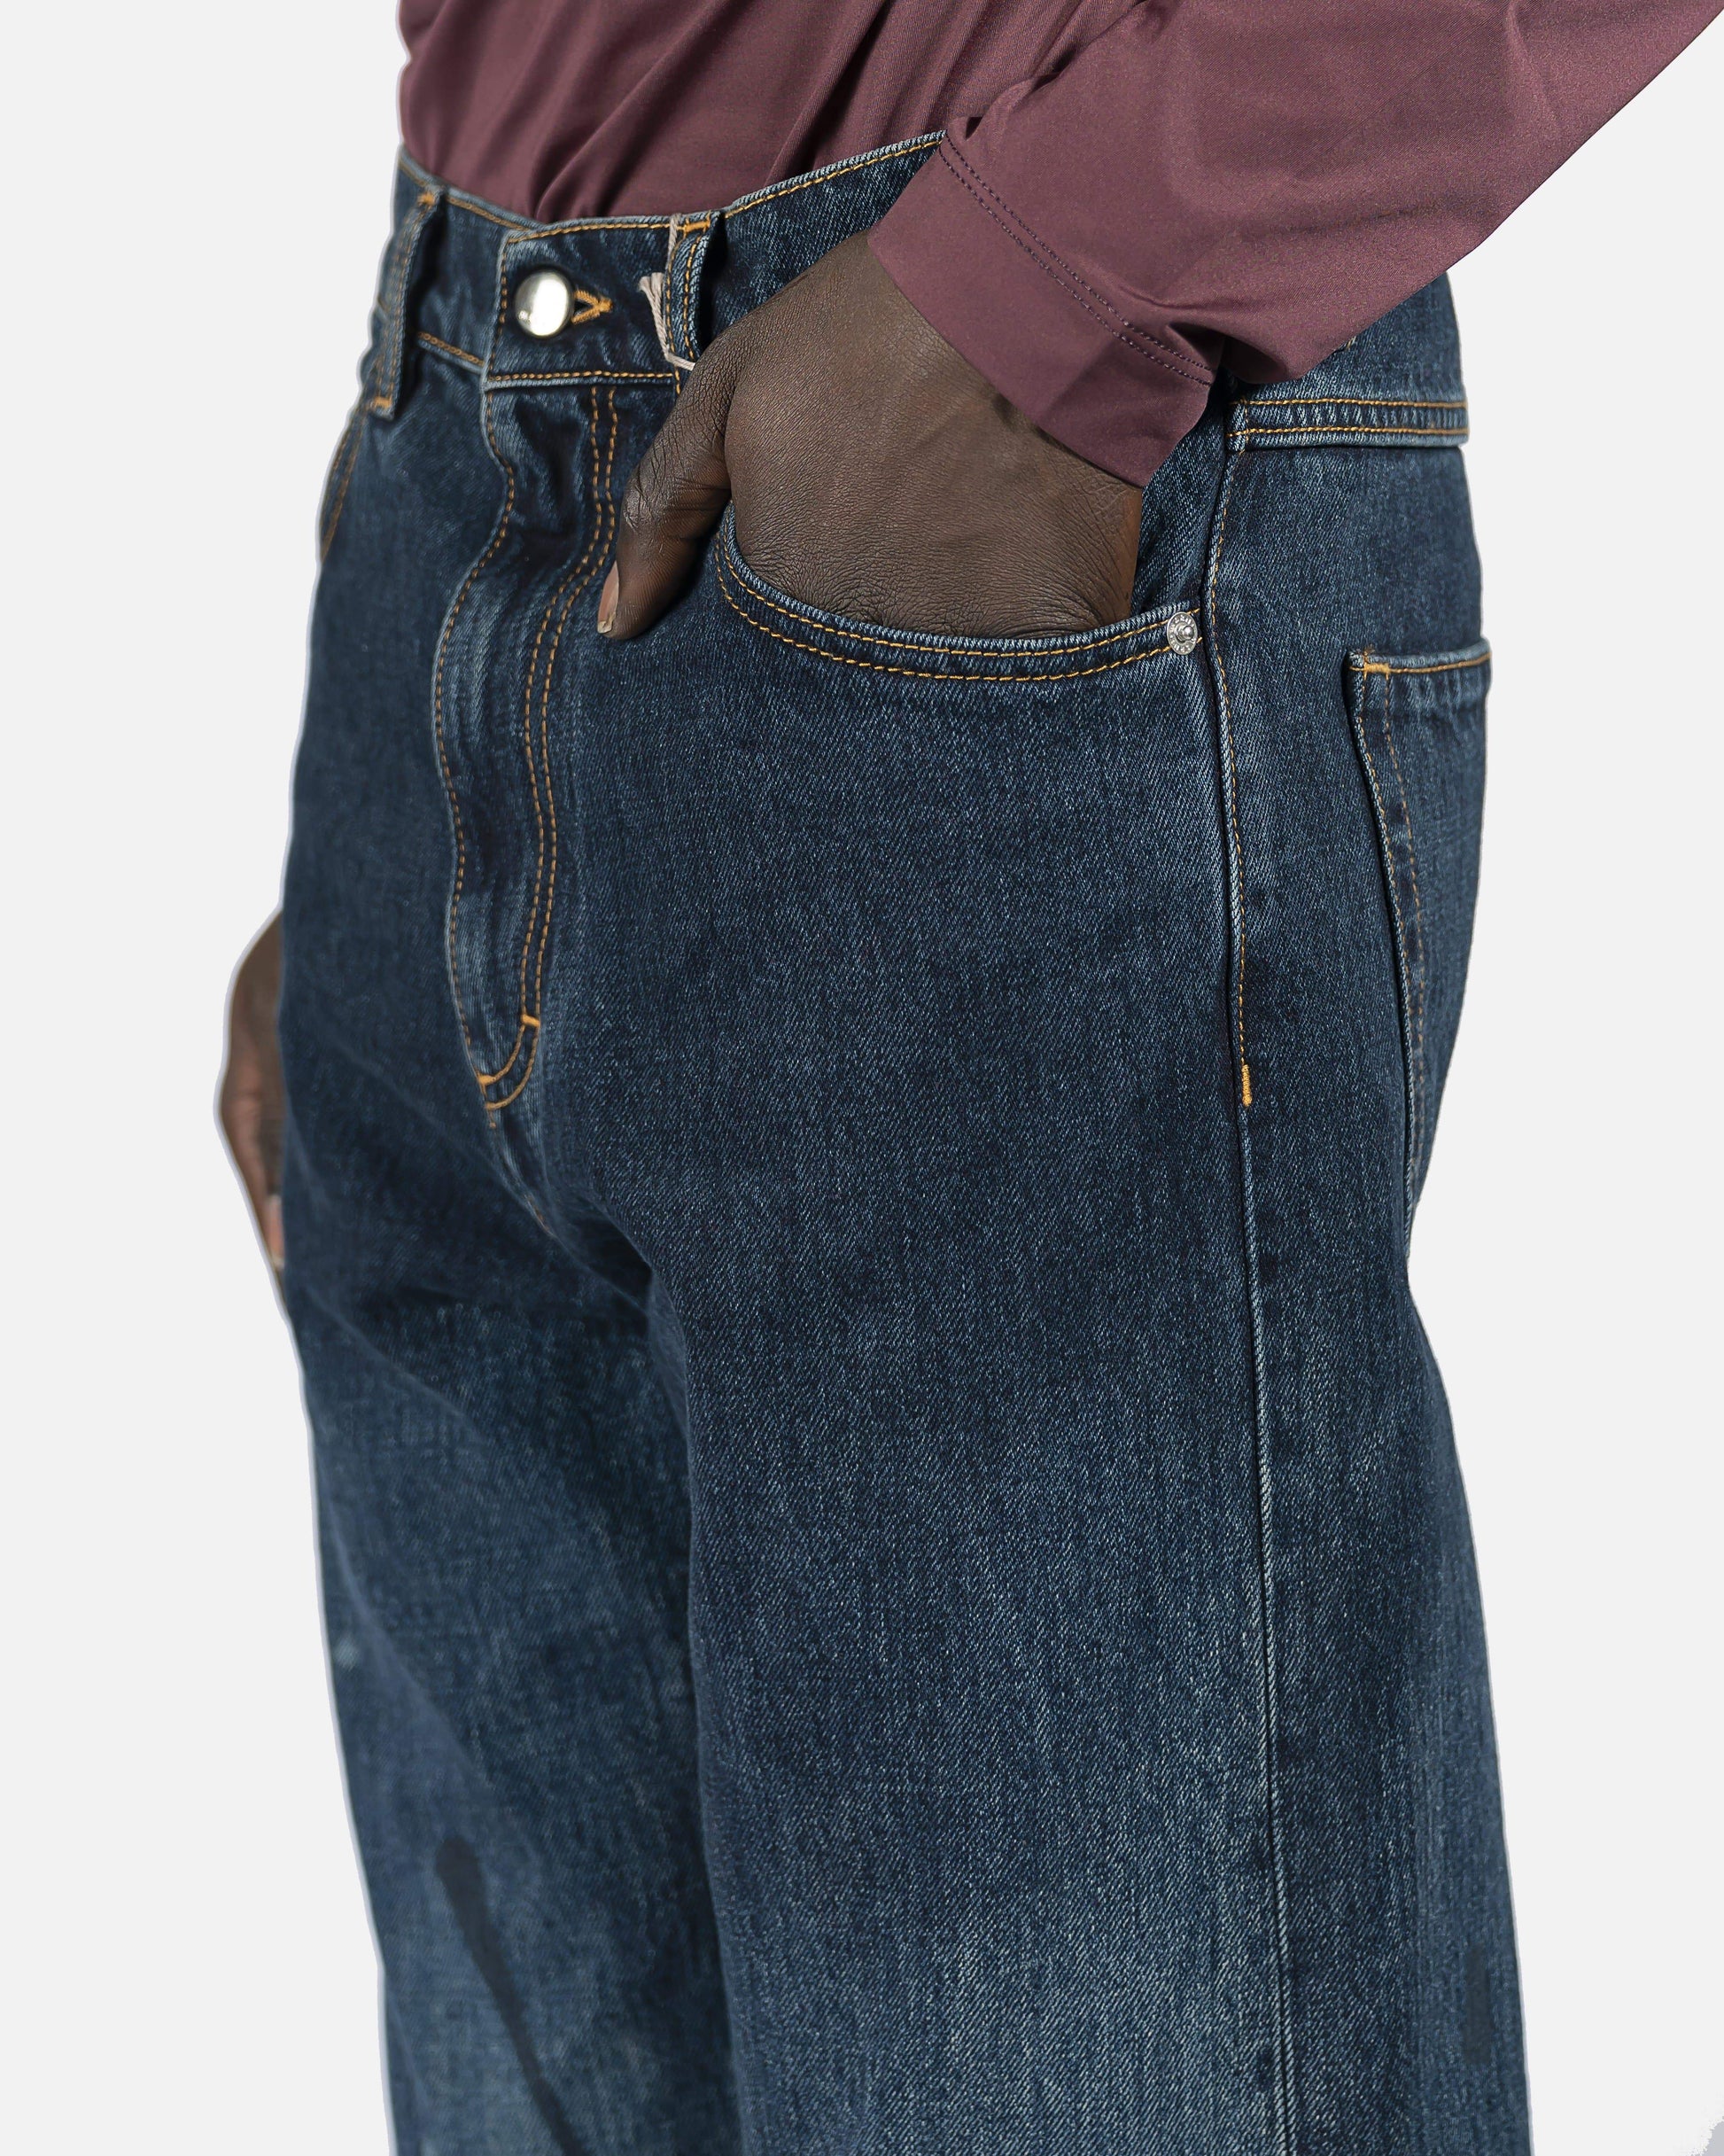 Marni Men's Jeans Found Objects Denim Trousers in Indigo